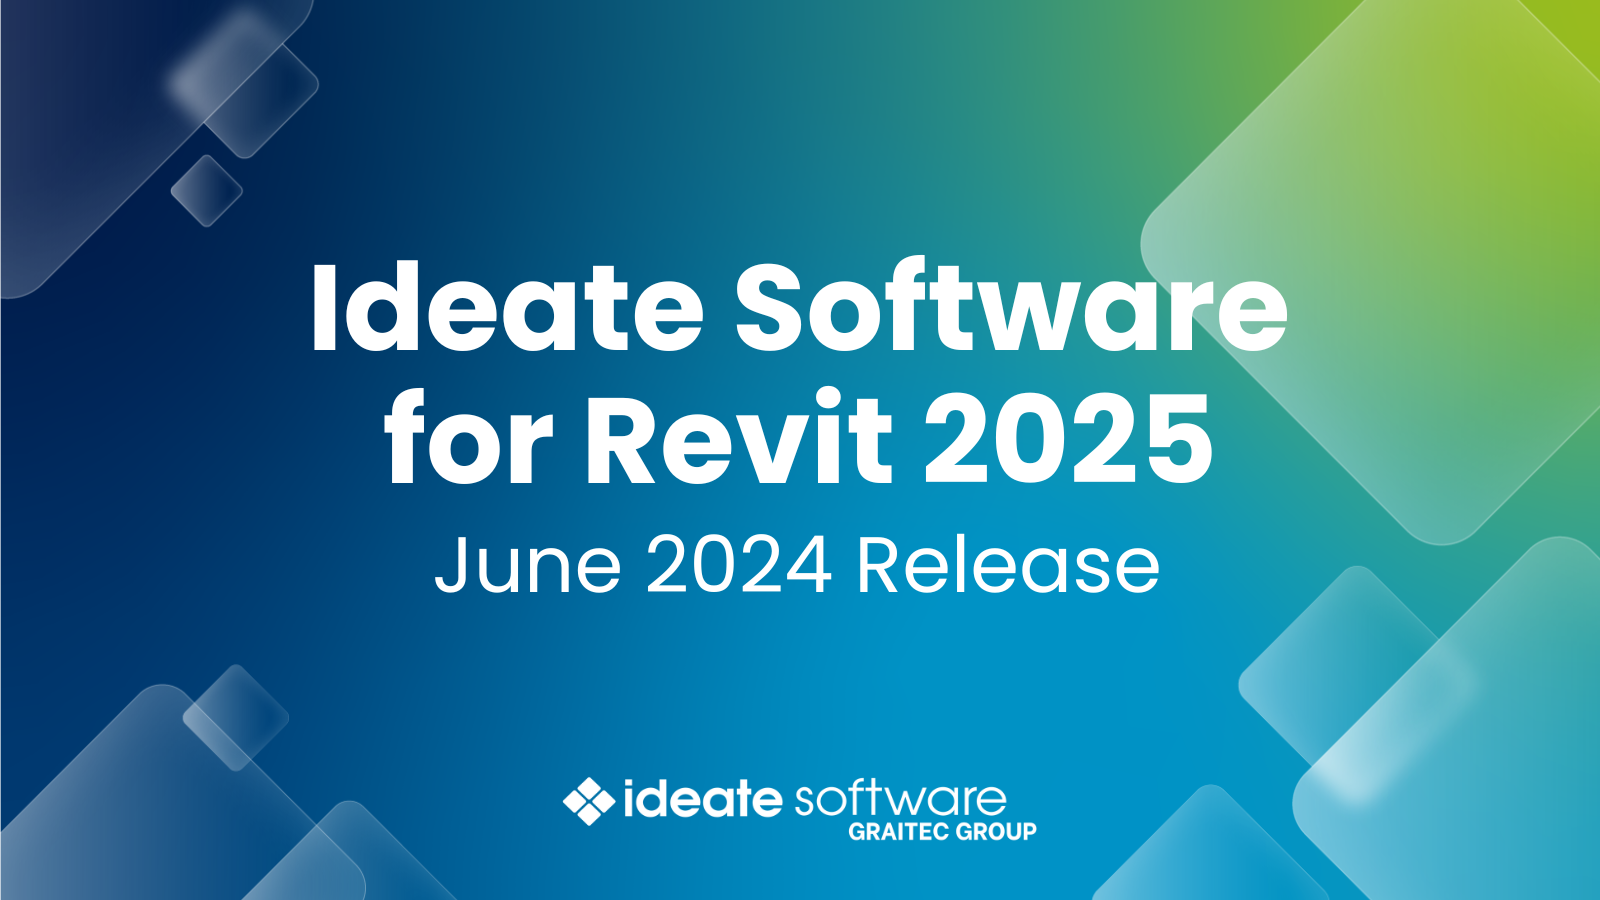 Ideate Software, GRAITEC Group Announces Major Enhancements to Revit Add-In Tools